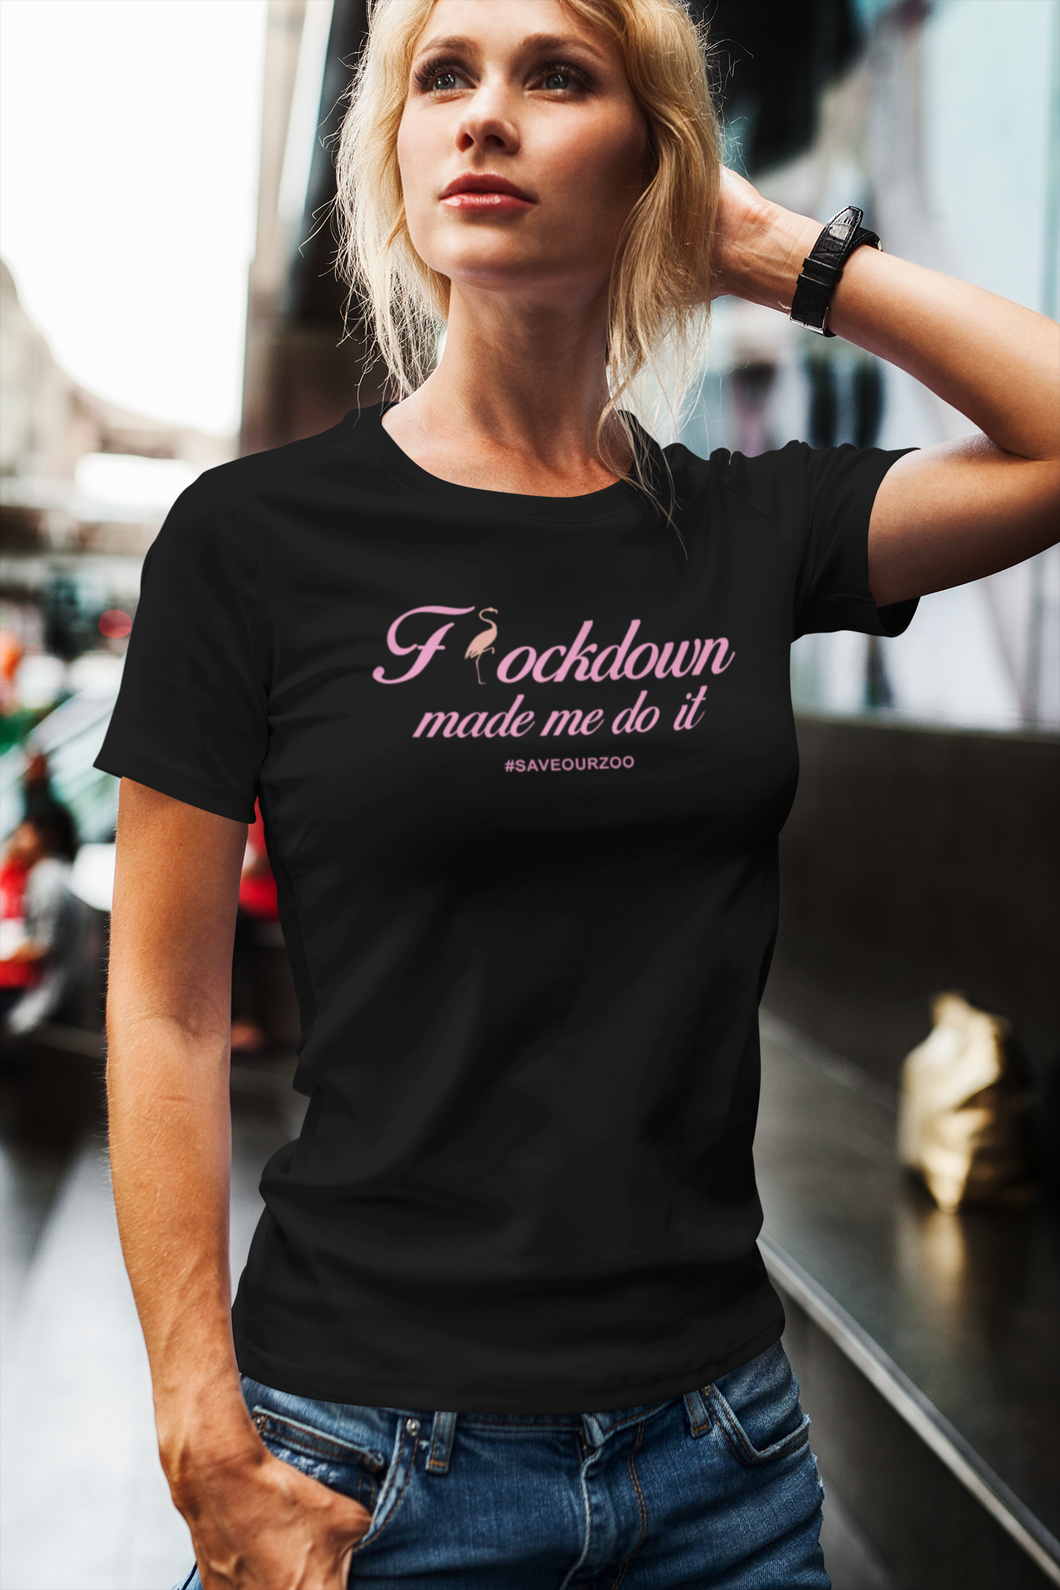 Flockdown - Female Fit T-Shirt - #SaveOurZoo